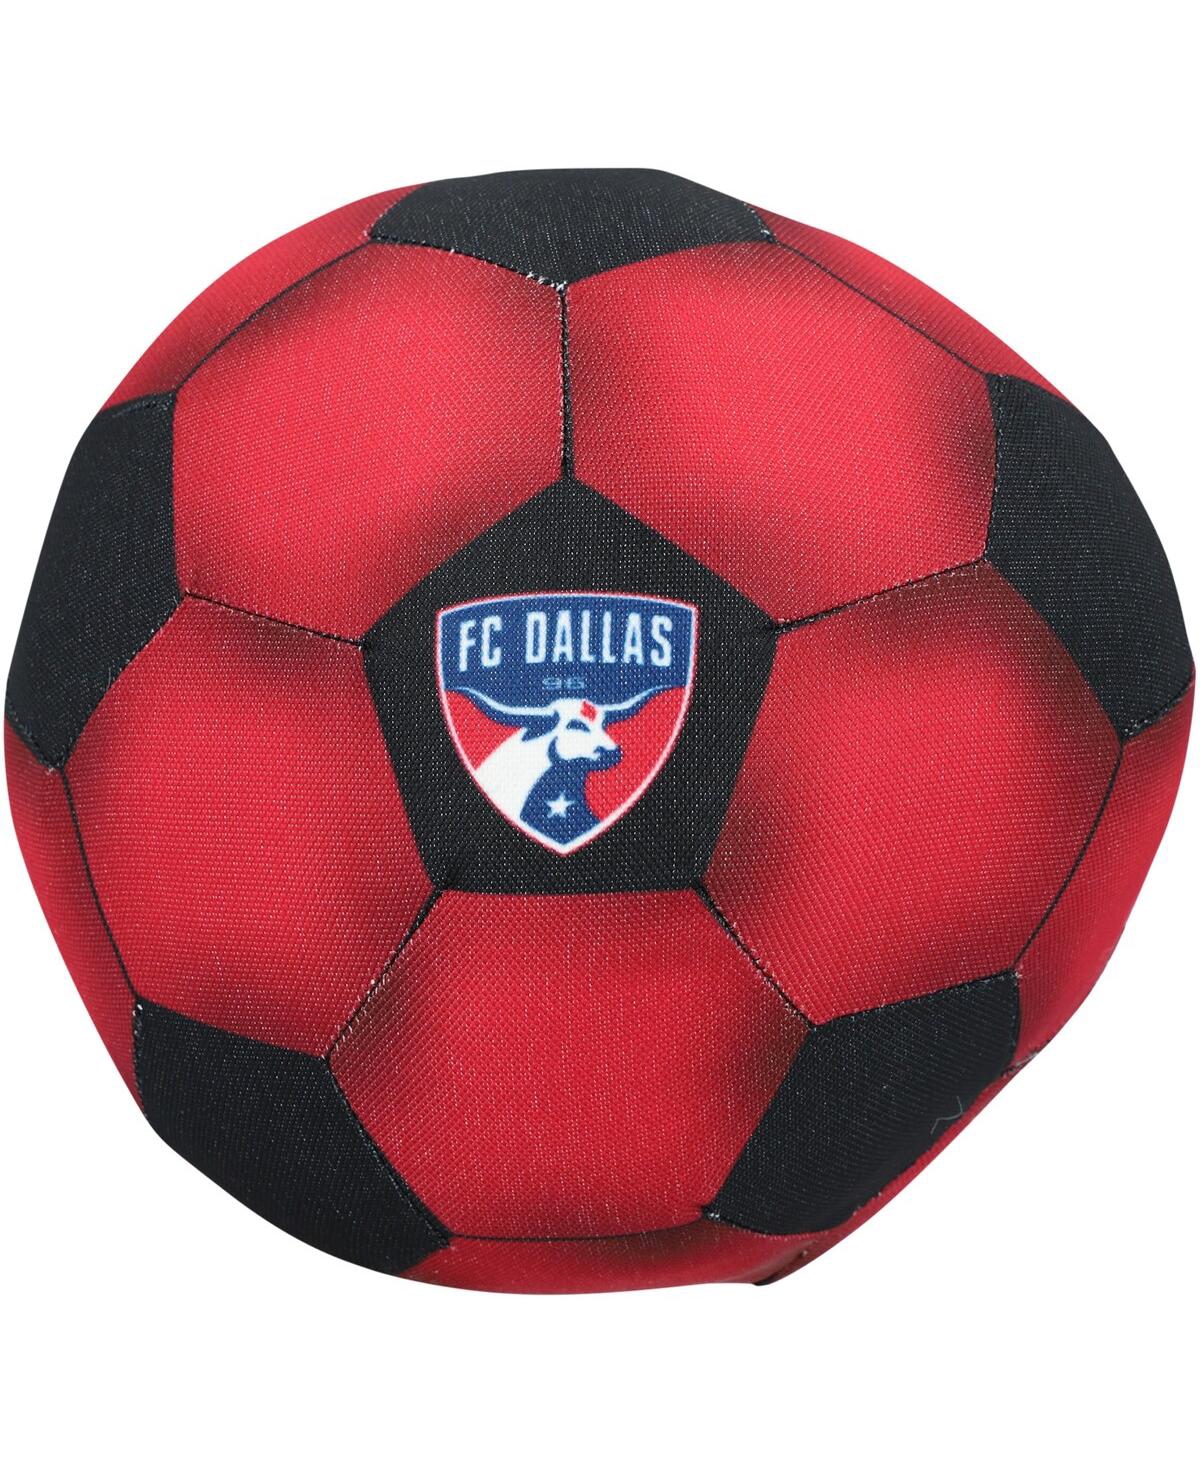 Fc Dallas Soccer Ball Plush Dog Toy - Red